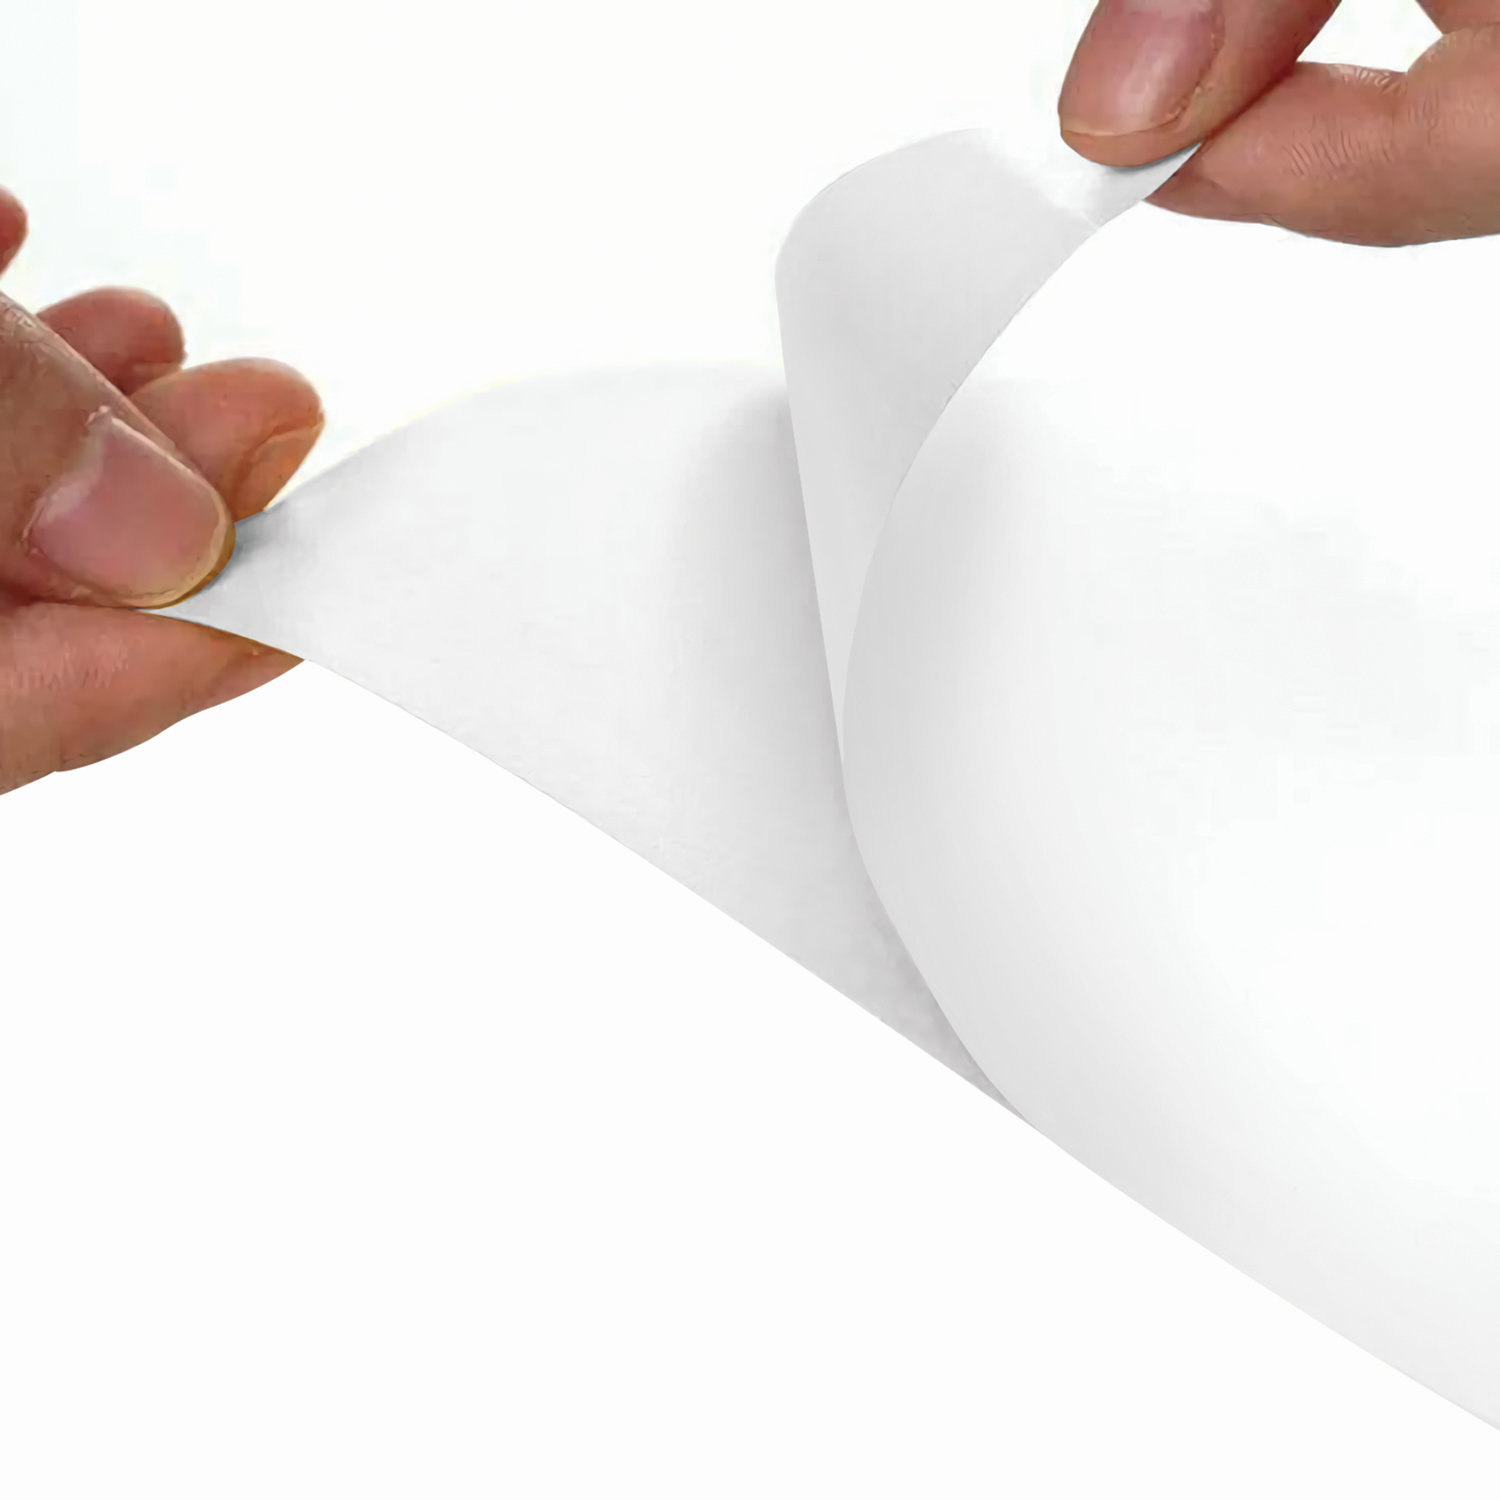 Этикетка самоклеящаяся LOMOND на листе формата А4,40 этик., размер 48,5х25,4мм,белая,50л.(2100195)